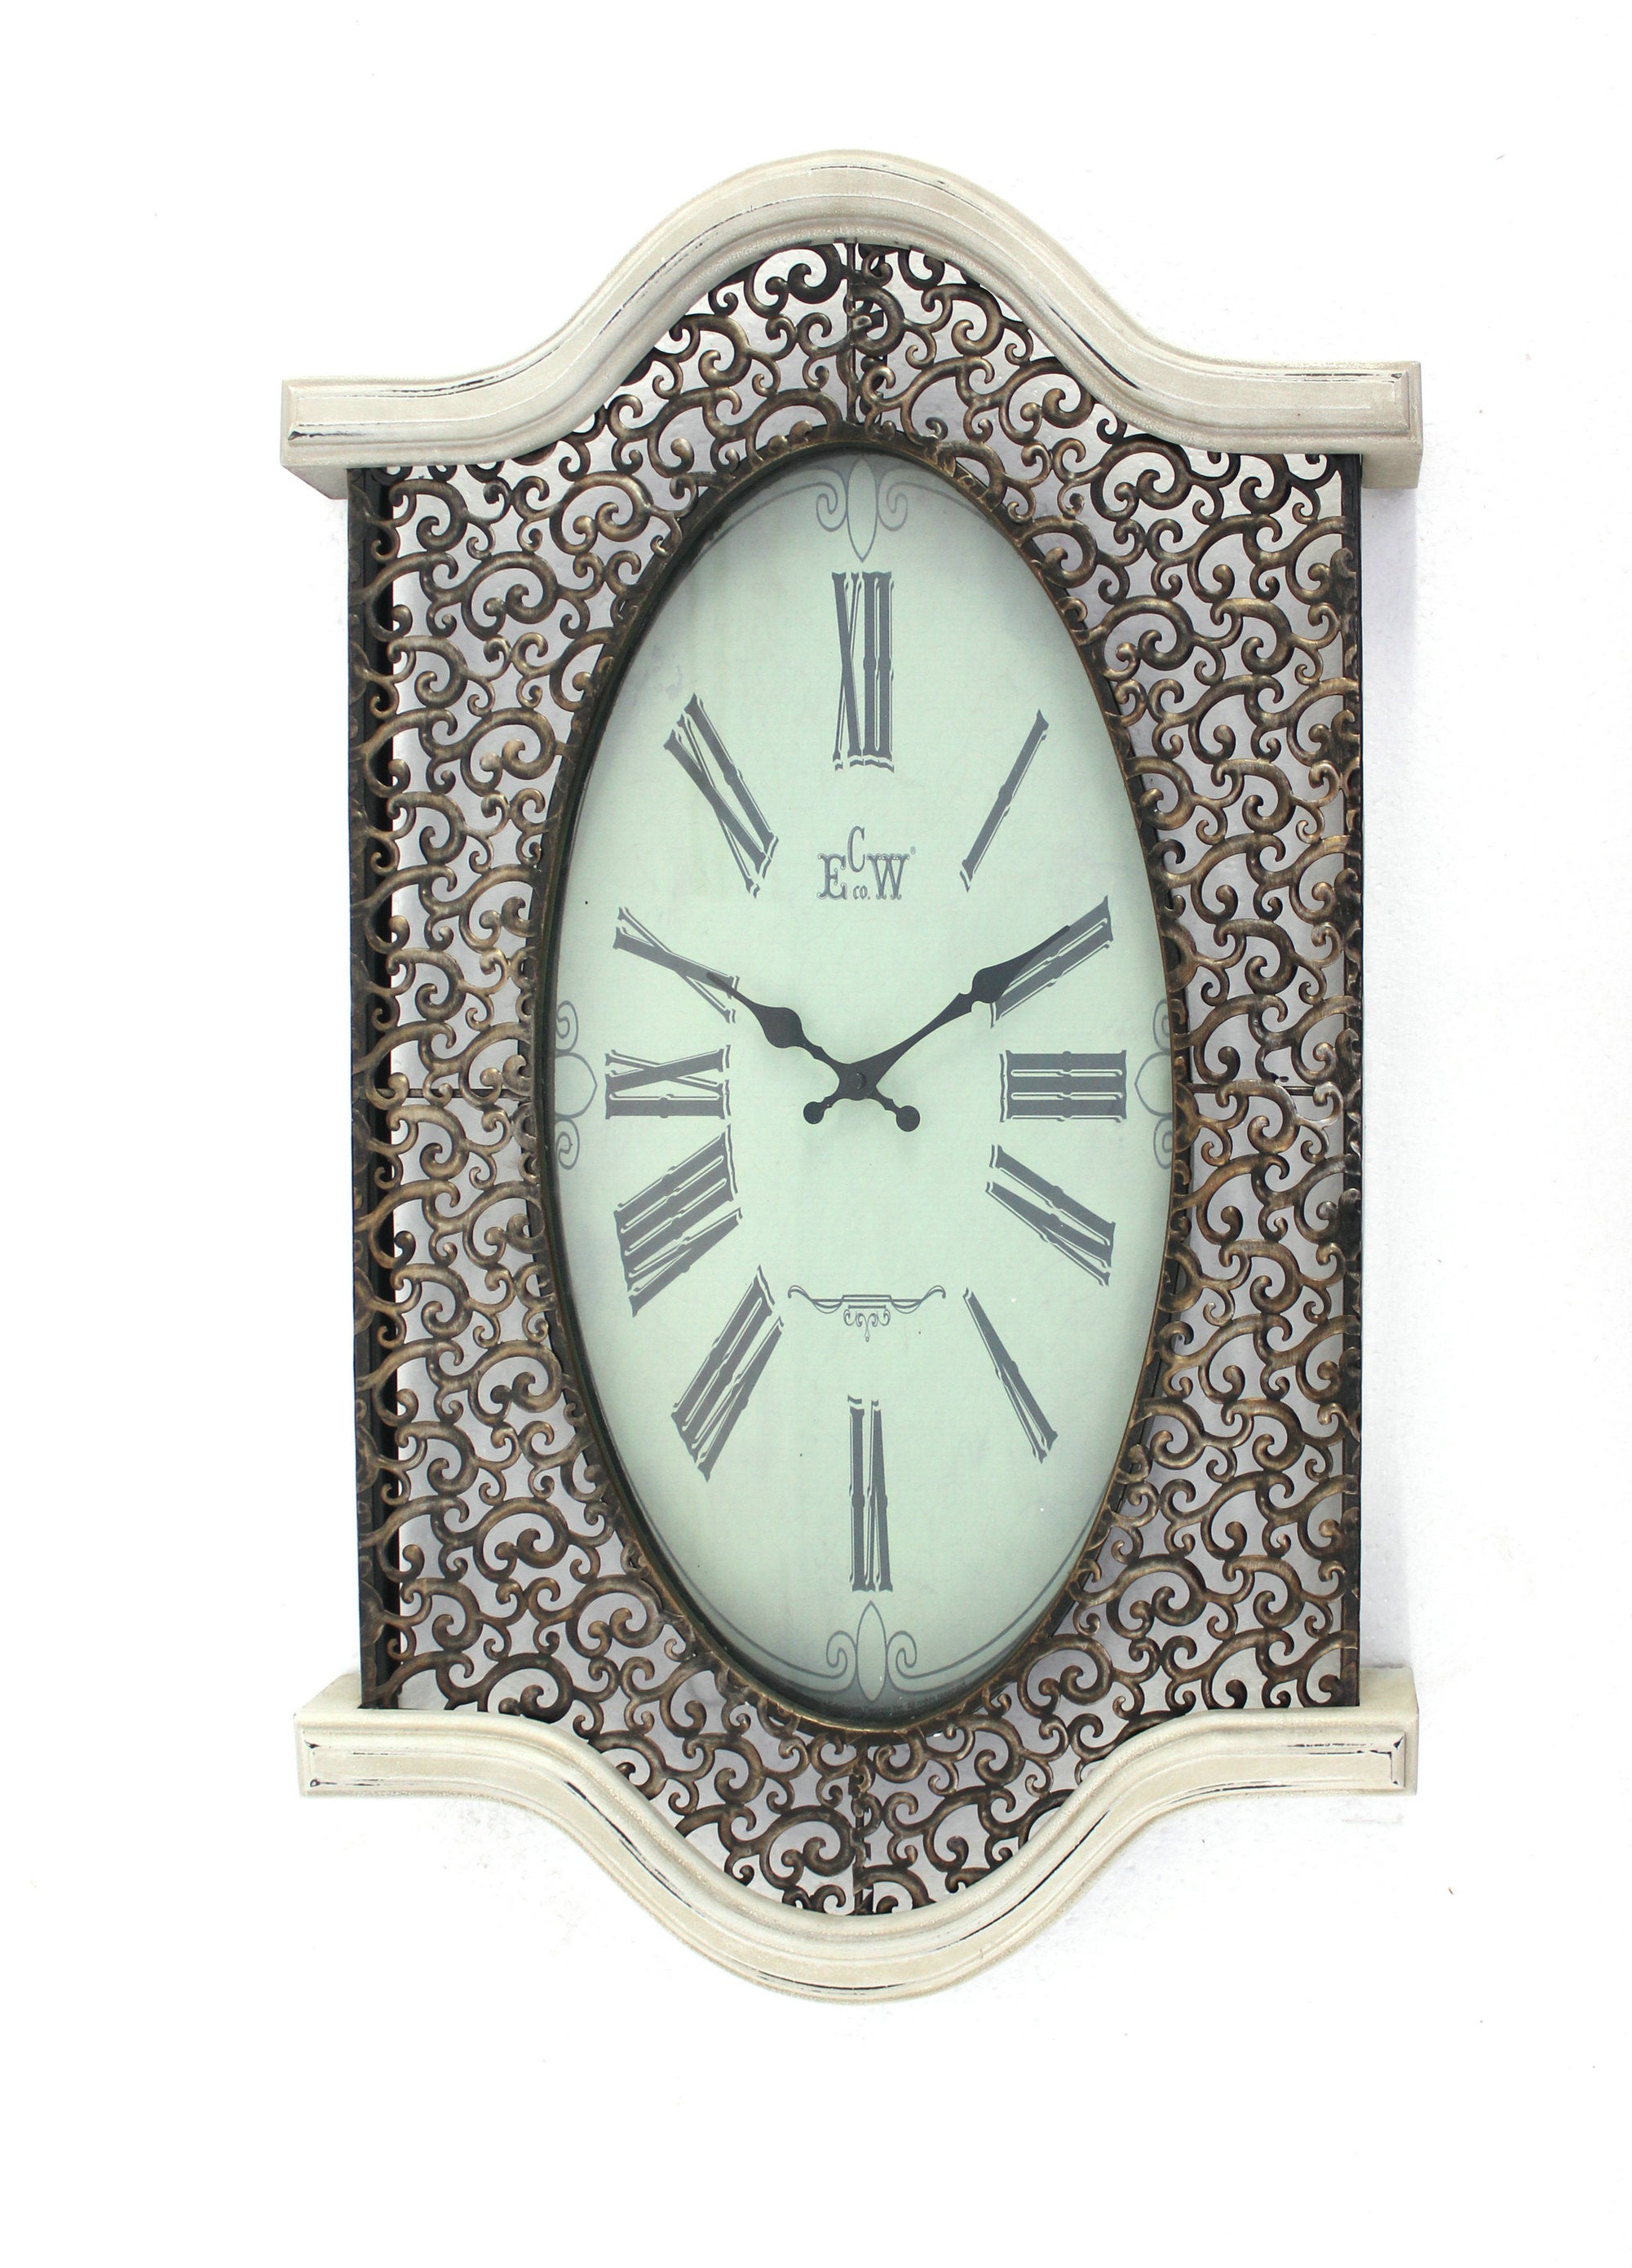 20" Novelty Black Wood And Glass Analog Wall Clock